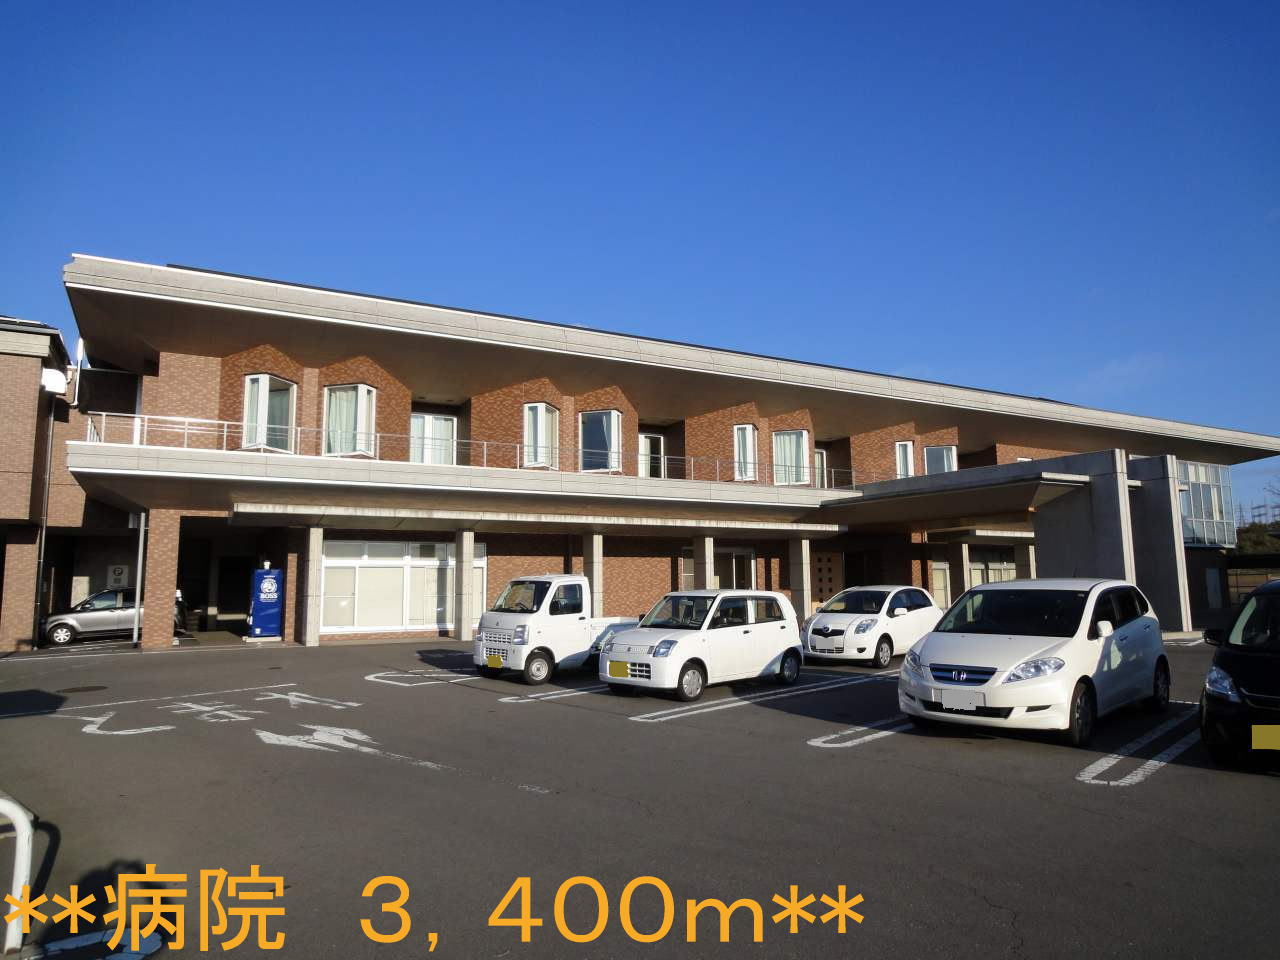 Hospital. Tomi City Hospital (hospital) to 3400m